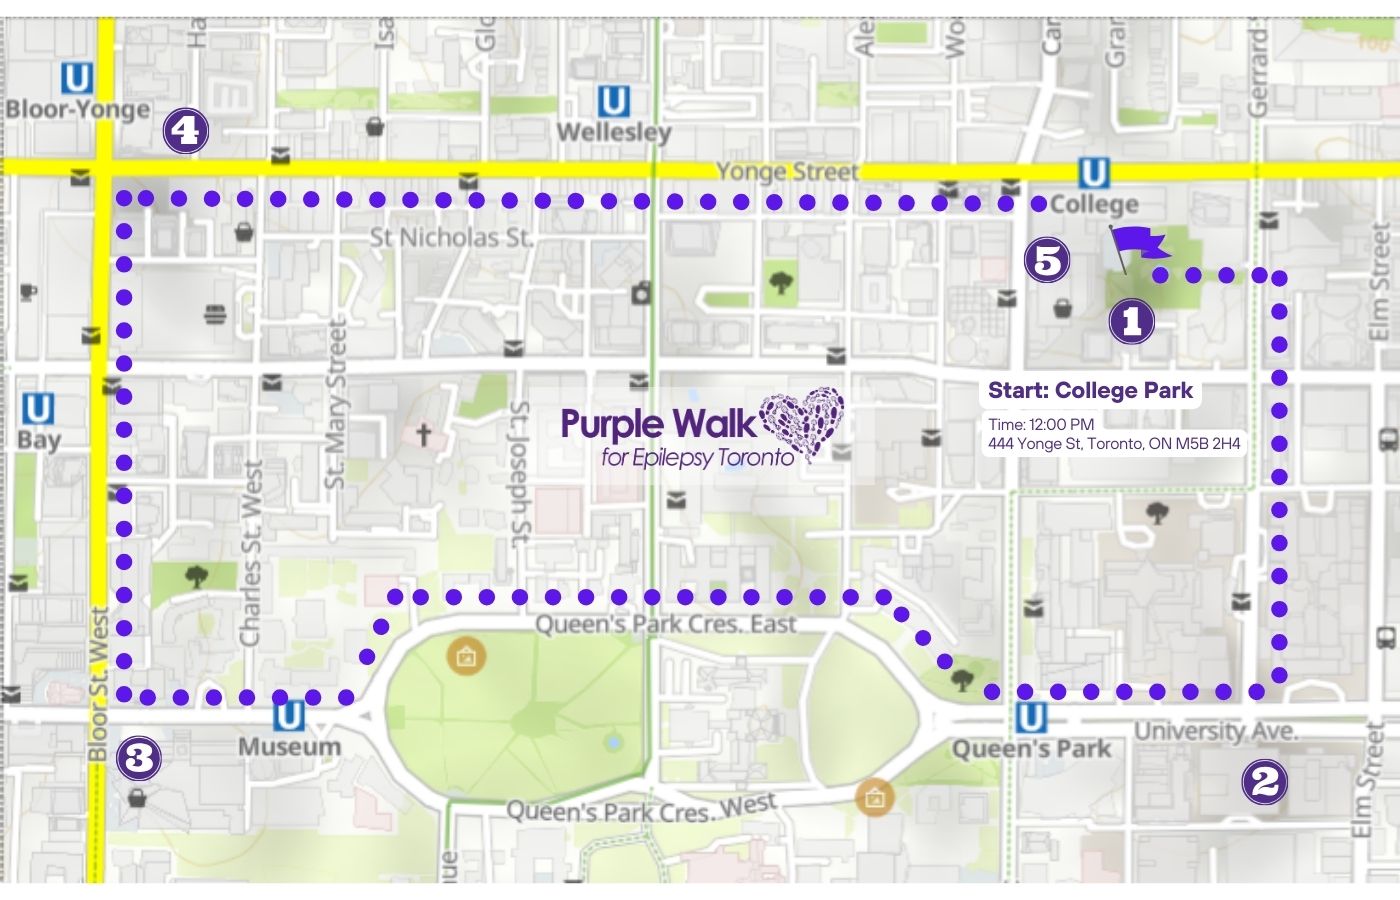 Purple Walk Route, Walk for Epilepsy, Epilepsy Awareness.